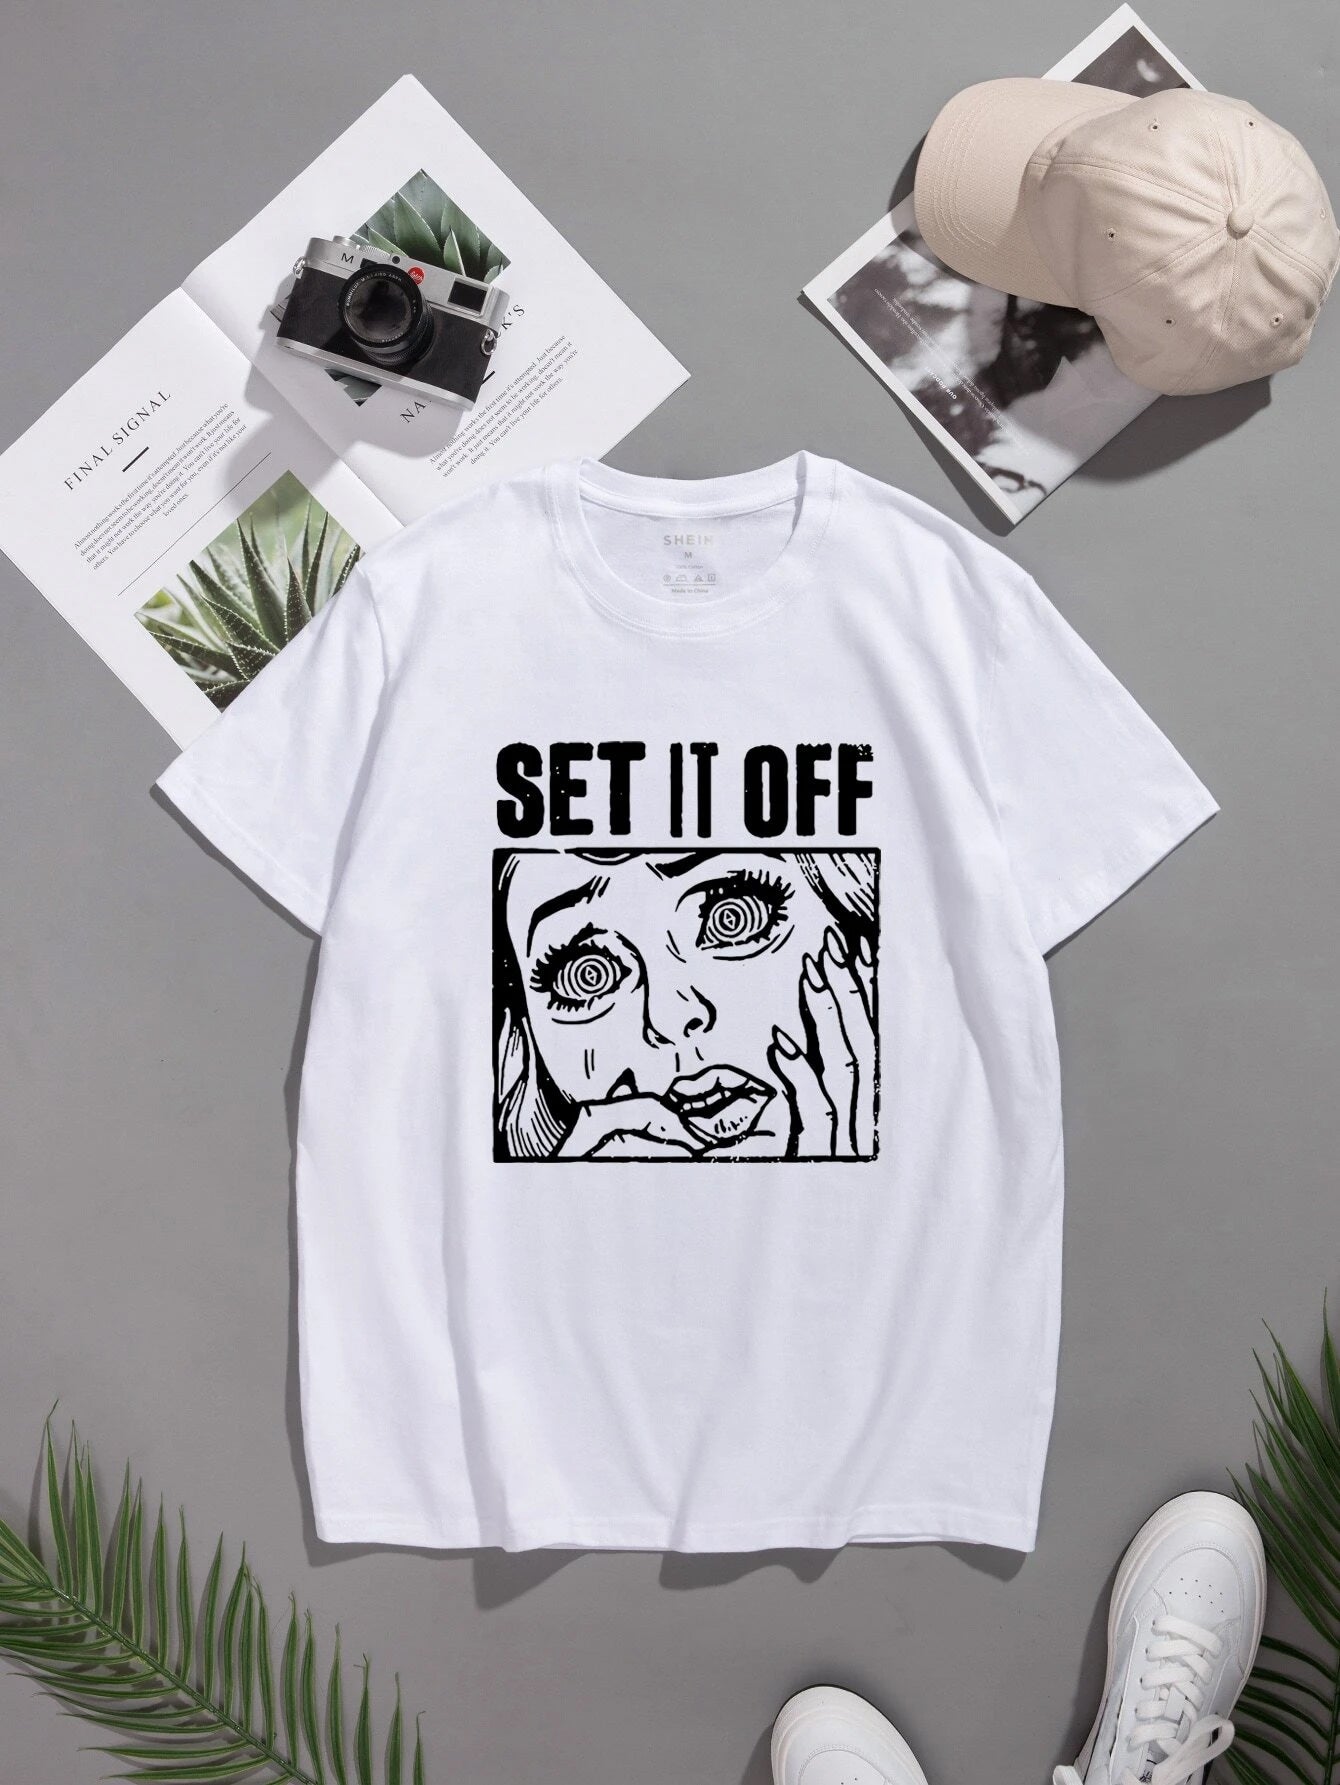 SHEIN Figure and Slogan T-Shirt - Negative Apparel